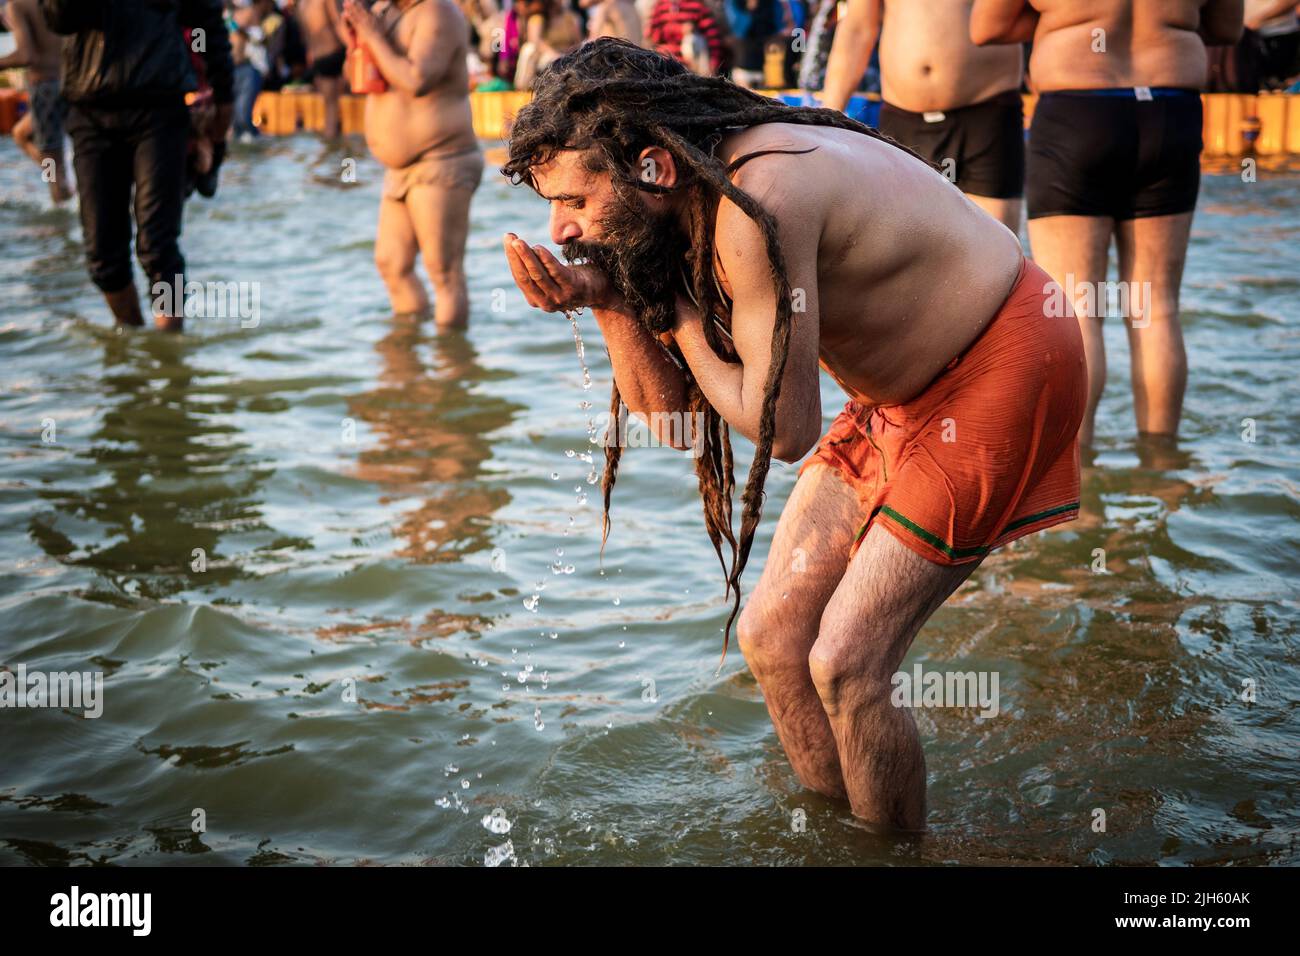 Un uomo indù beve e bagna nelle acque sacre al Triveni Sangam al Kumbh Mela Festival ad Allahabad (Prayagraj), Utar Pradesh, India. Foto Stock